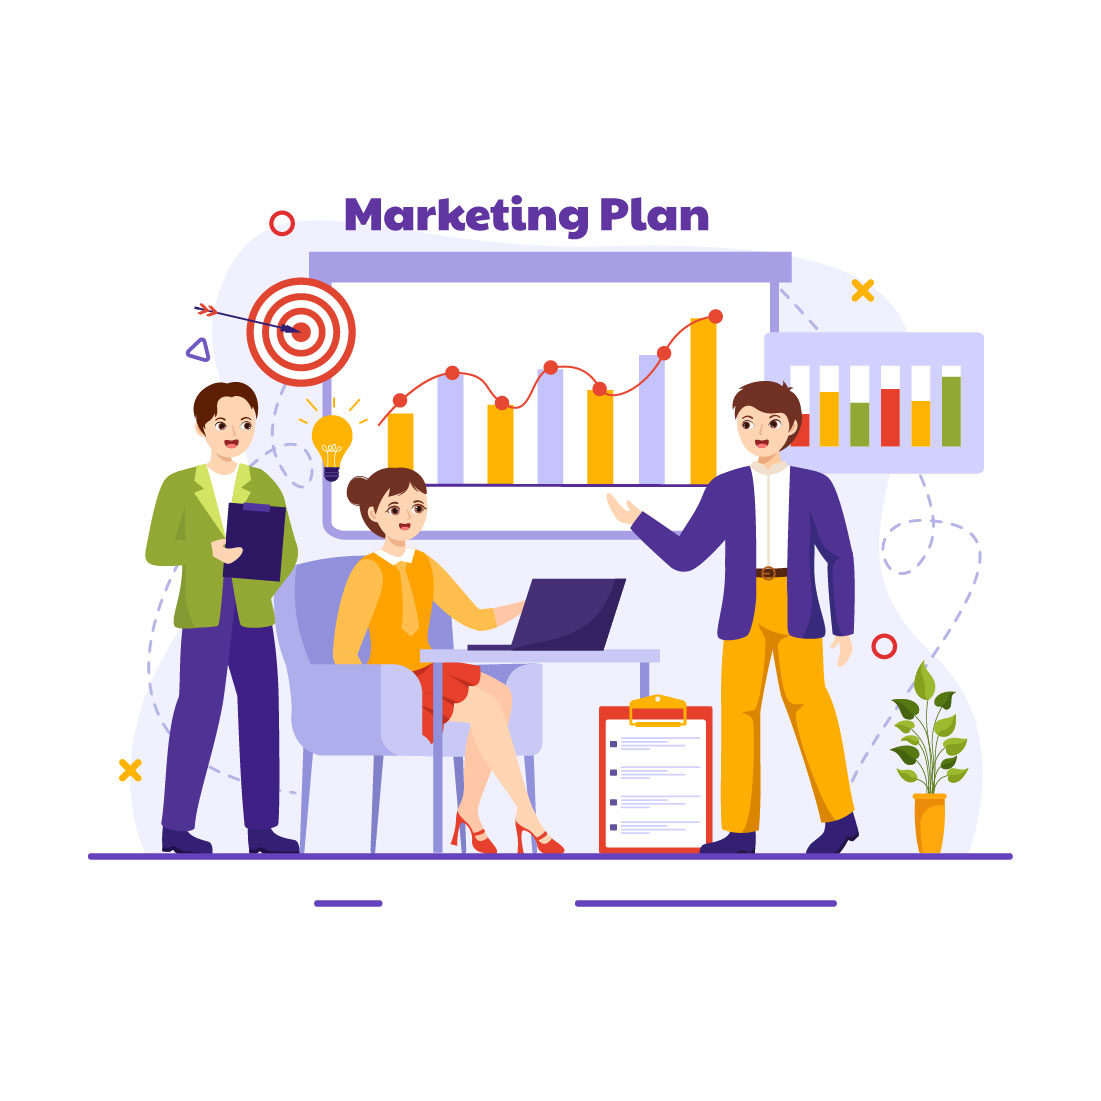 12 Marketing Plan Illustration cover image.